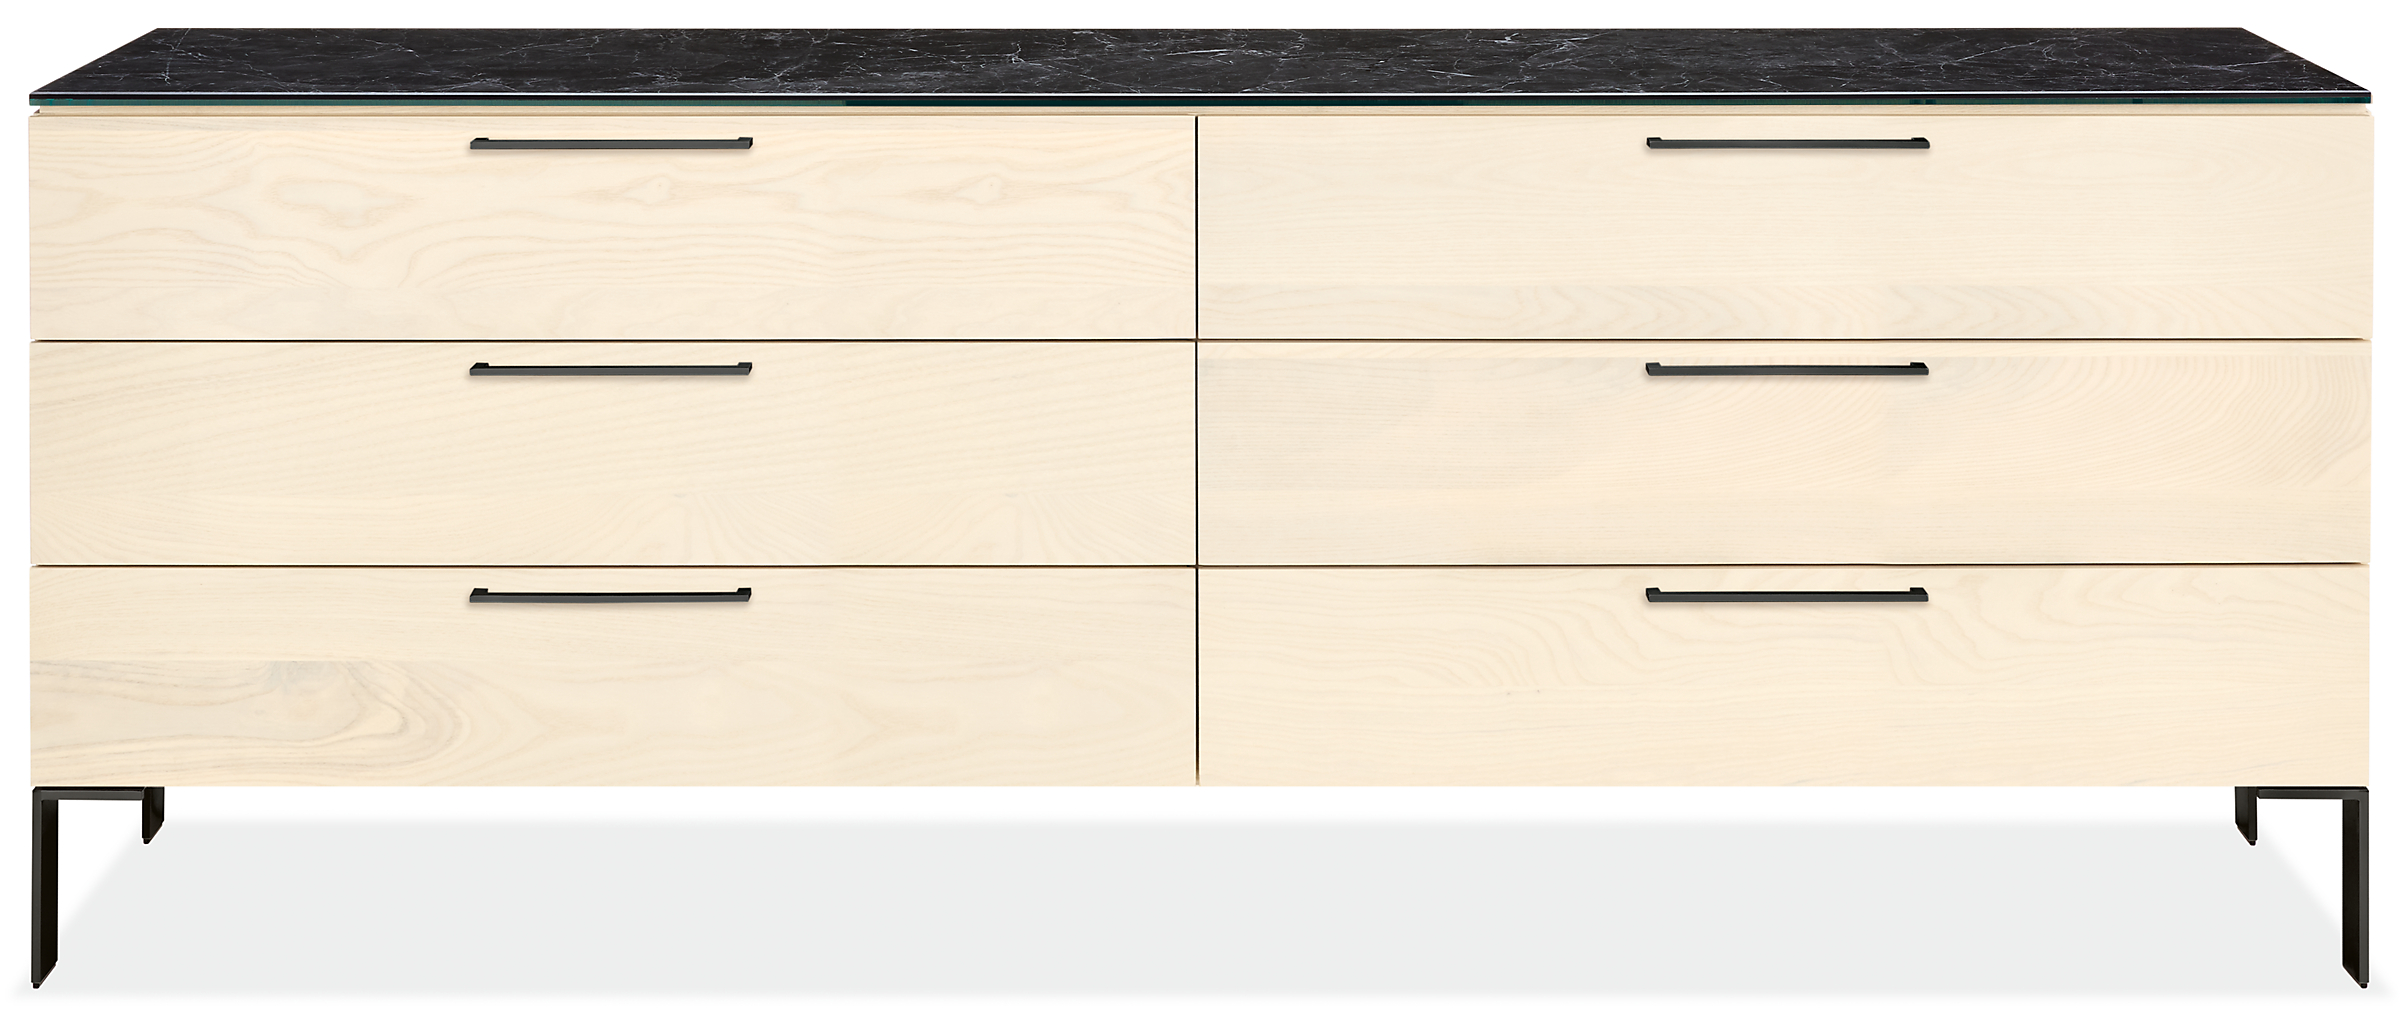 Kenwood 84w 20d 33h Six-Drawer Dresser with Ceramic Top